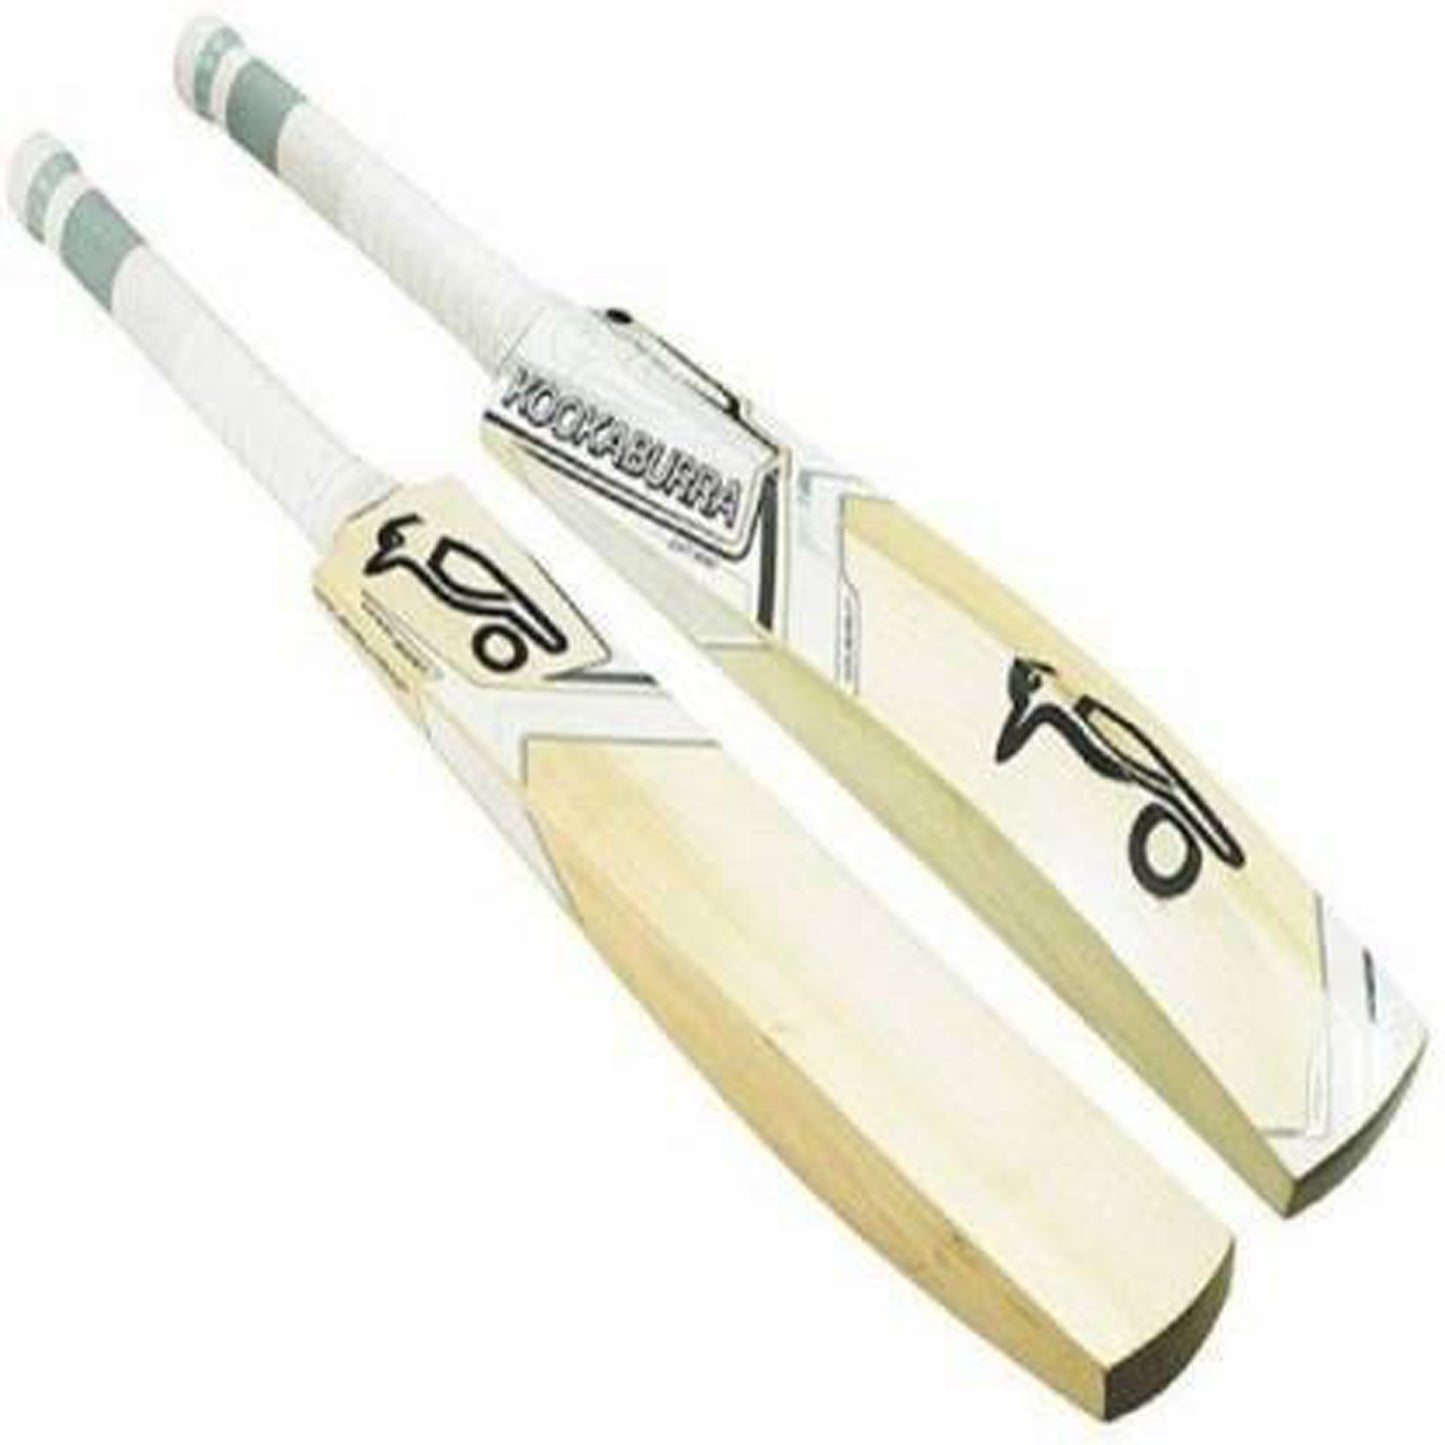 Kookaburra Ghost 300 English Willow Cricket bat - Best Price online Prokicksports.com